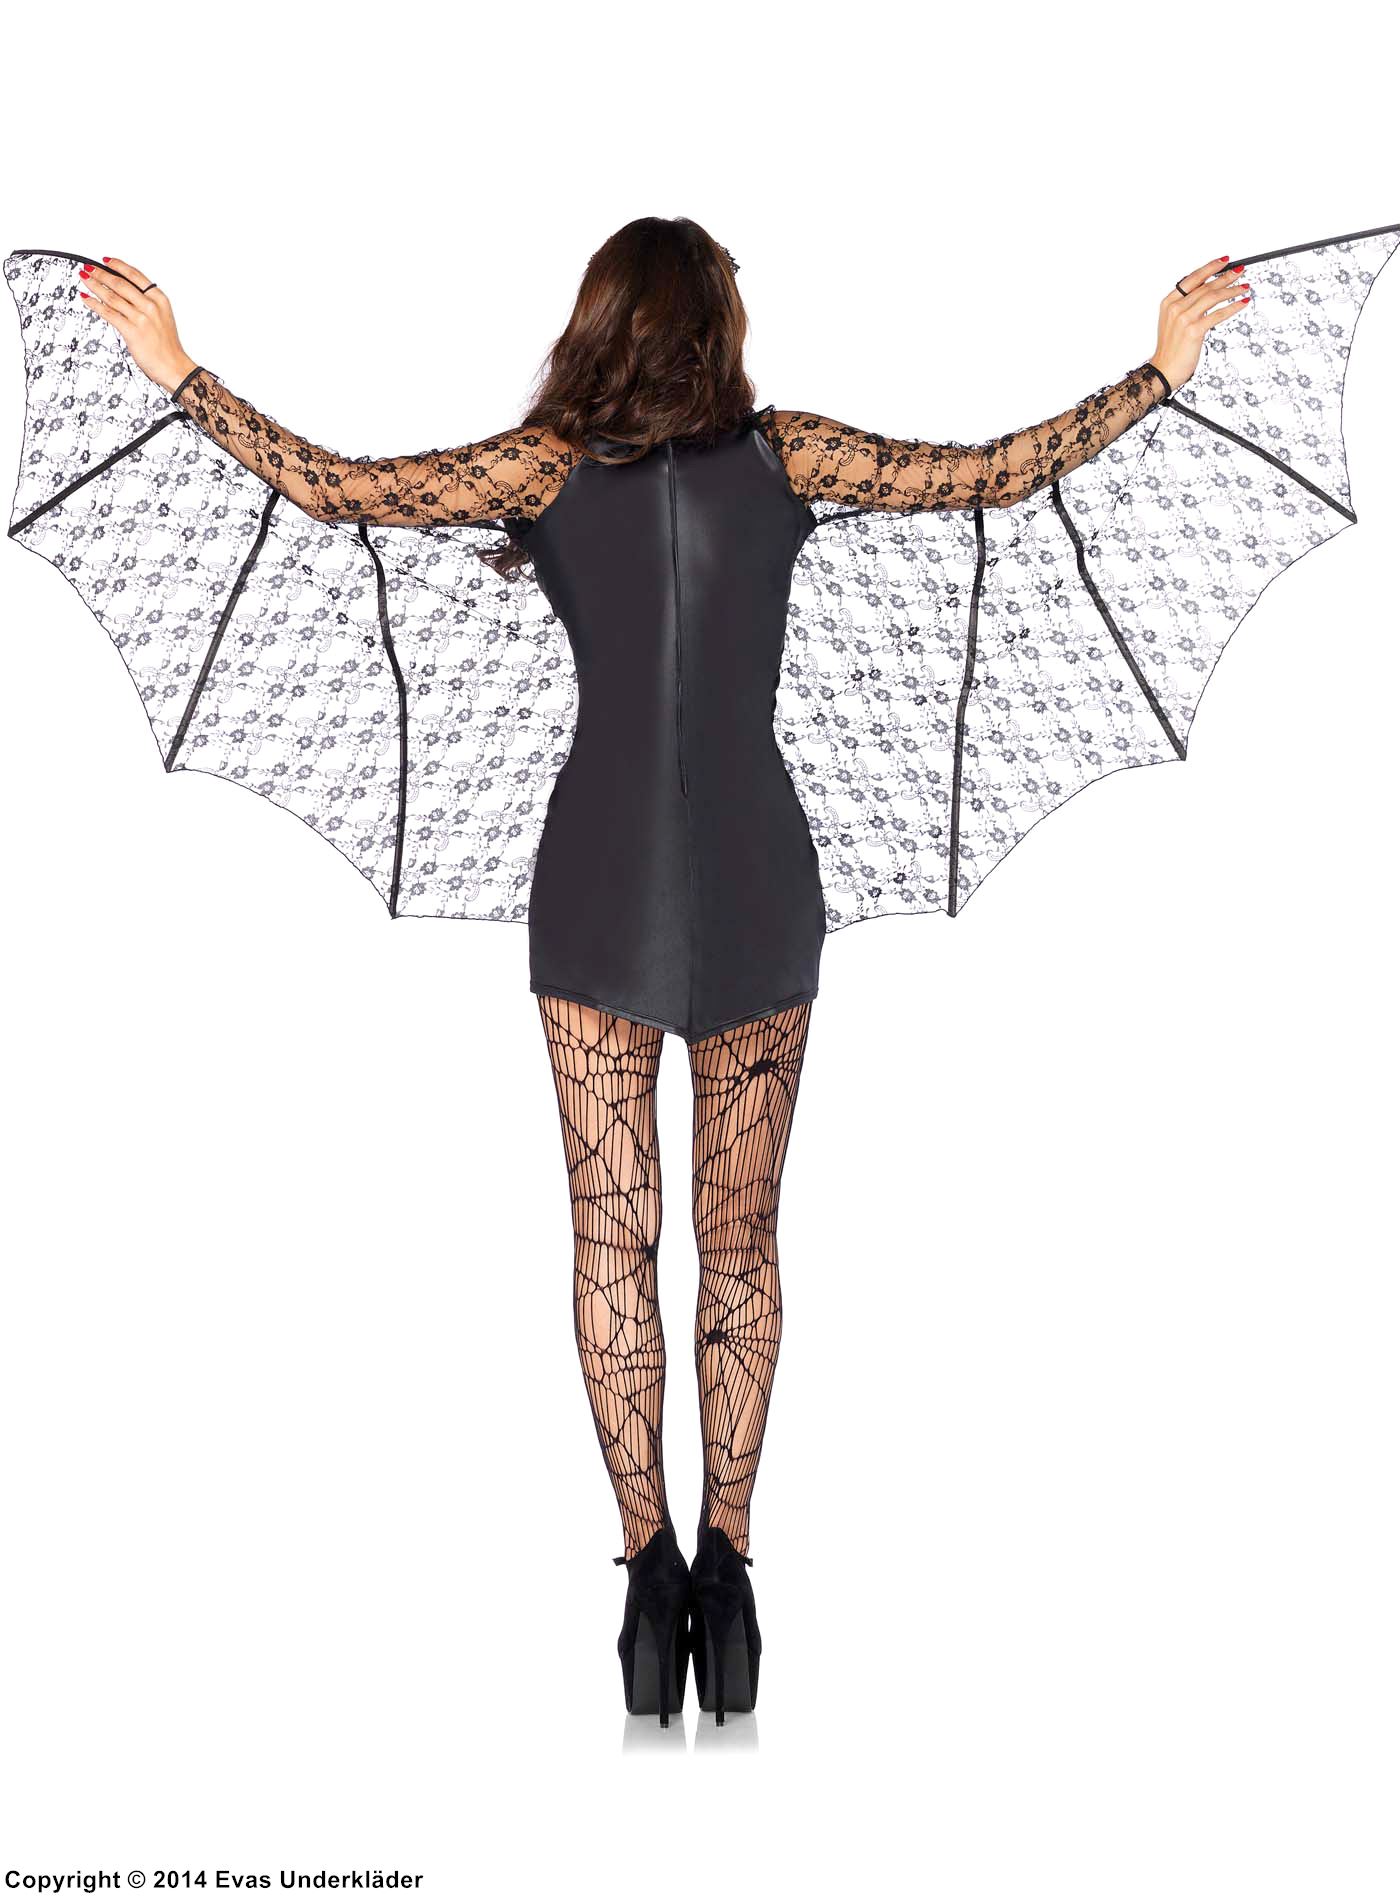 Female bat, costume dress, wet look, floral lace, wings